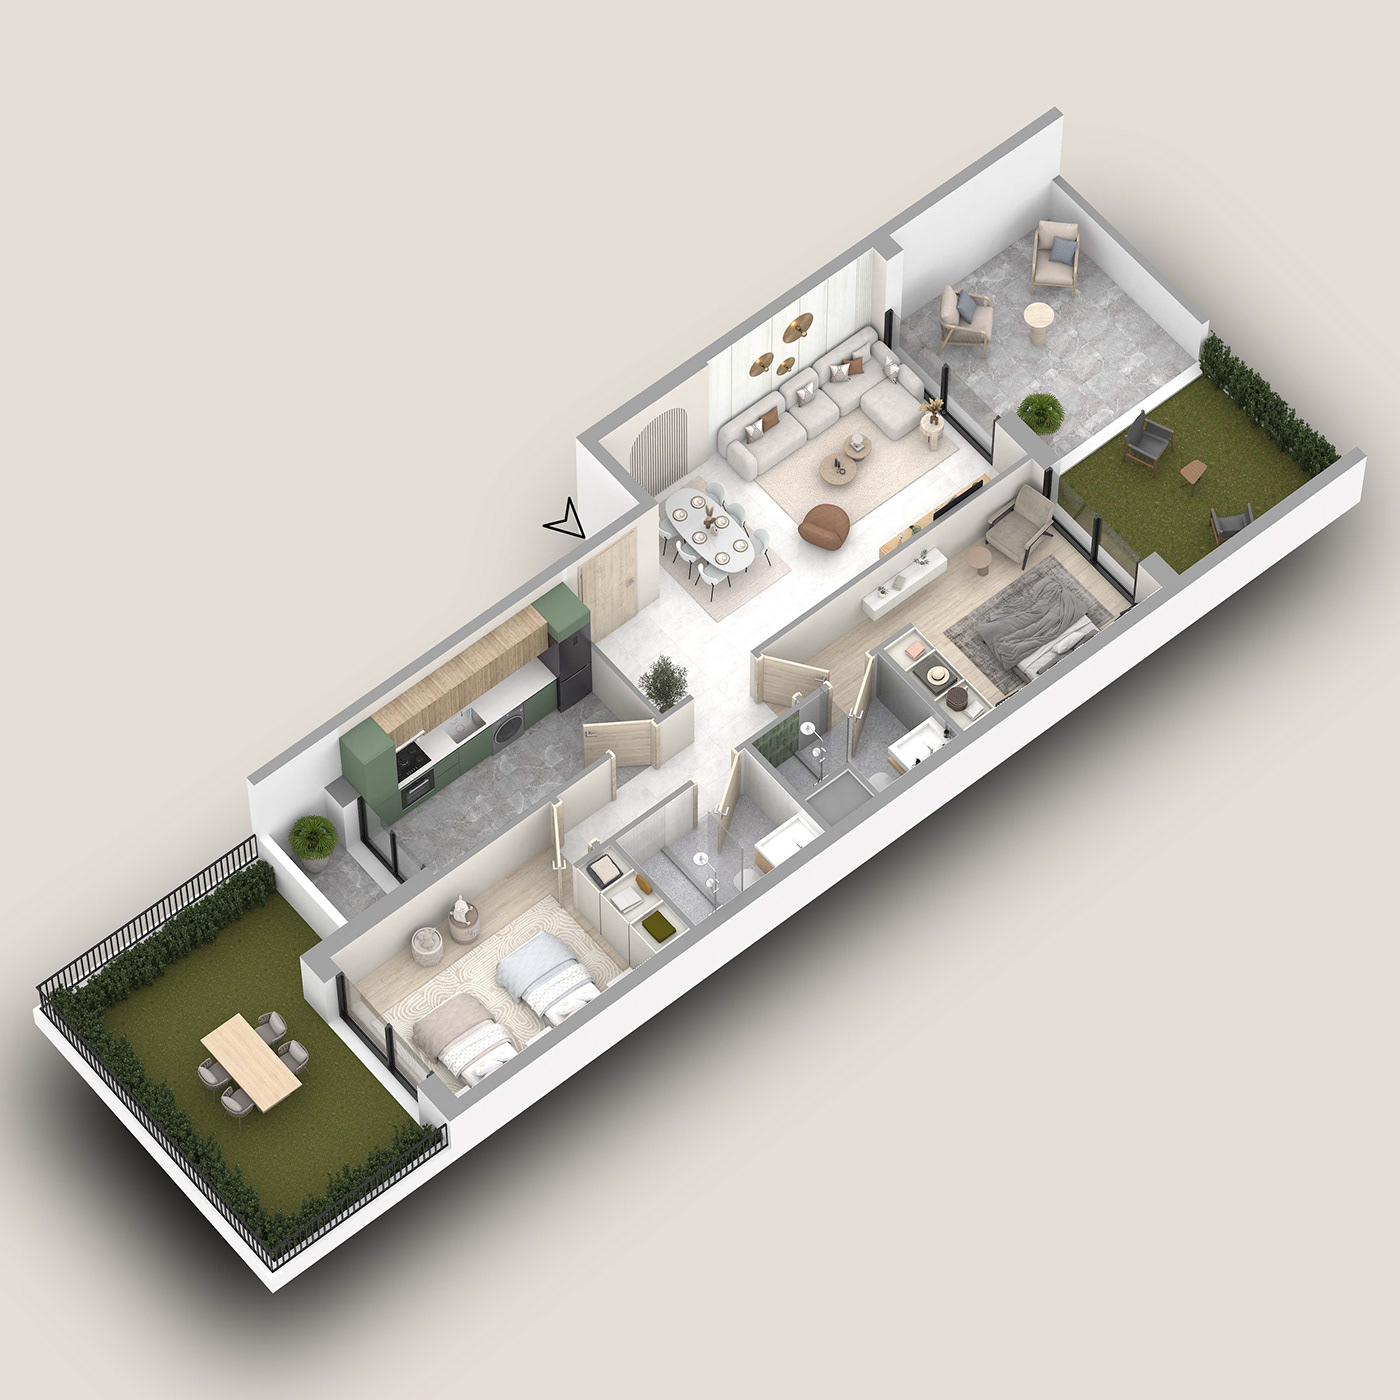 architecture interior design  Render vray 3ds max axonometries